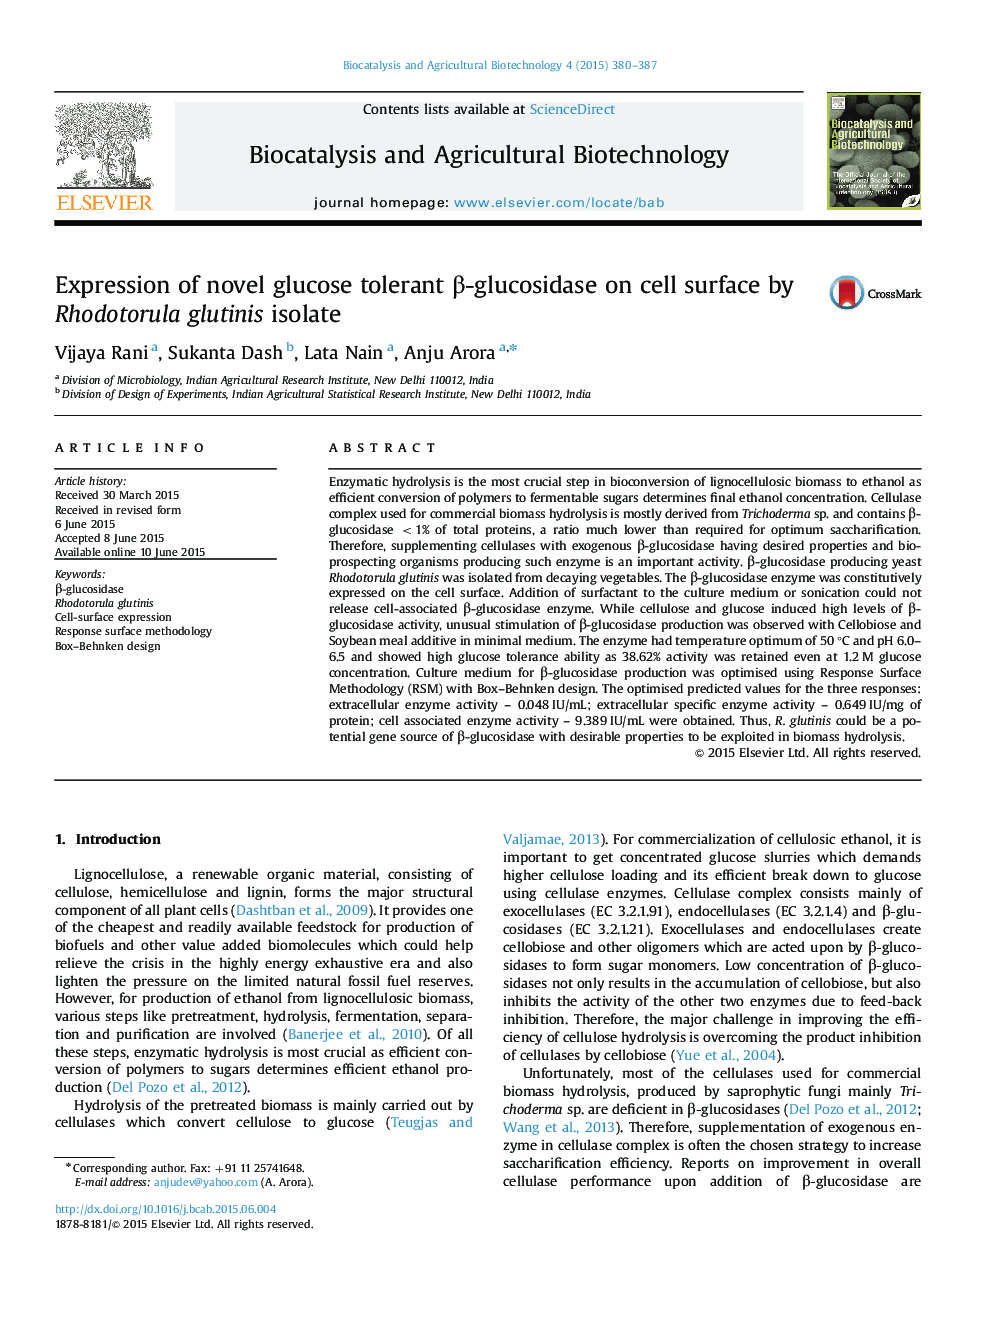 Expression of novel glucose tolerant Î²-glucosidase on cell surface by Rhodotorula glutinis isolate